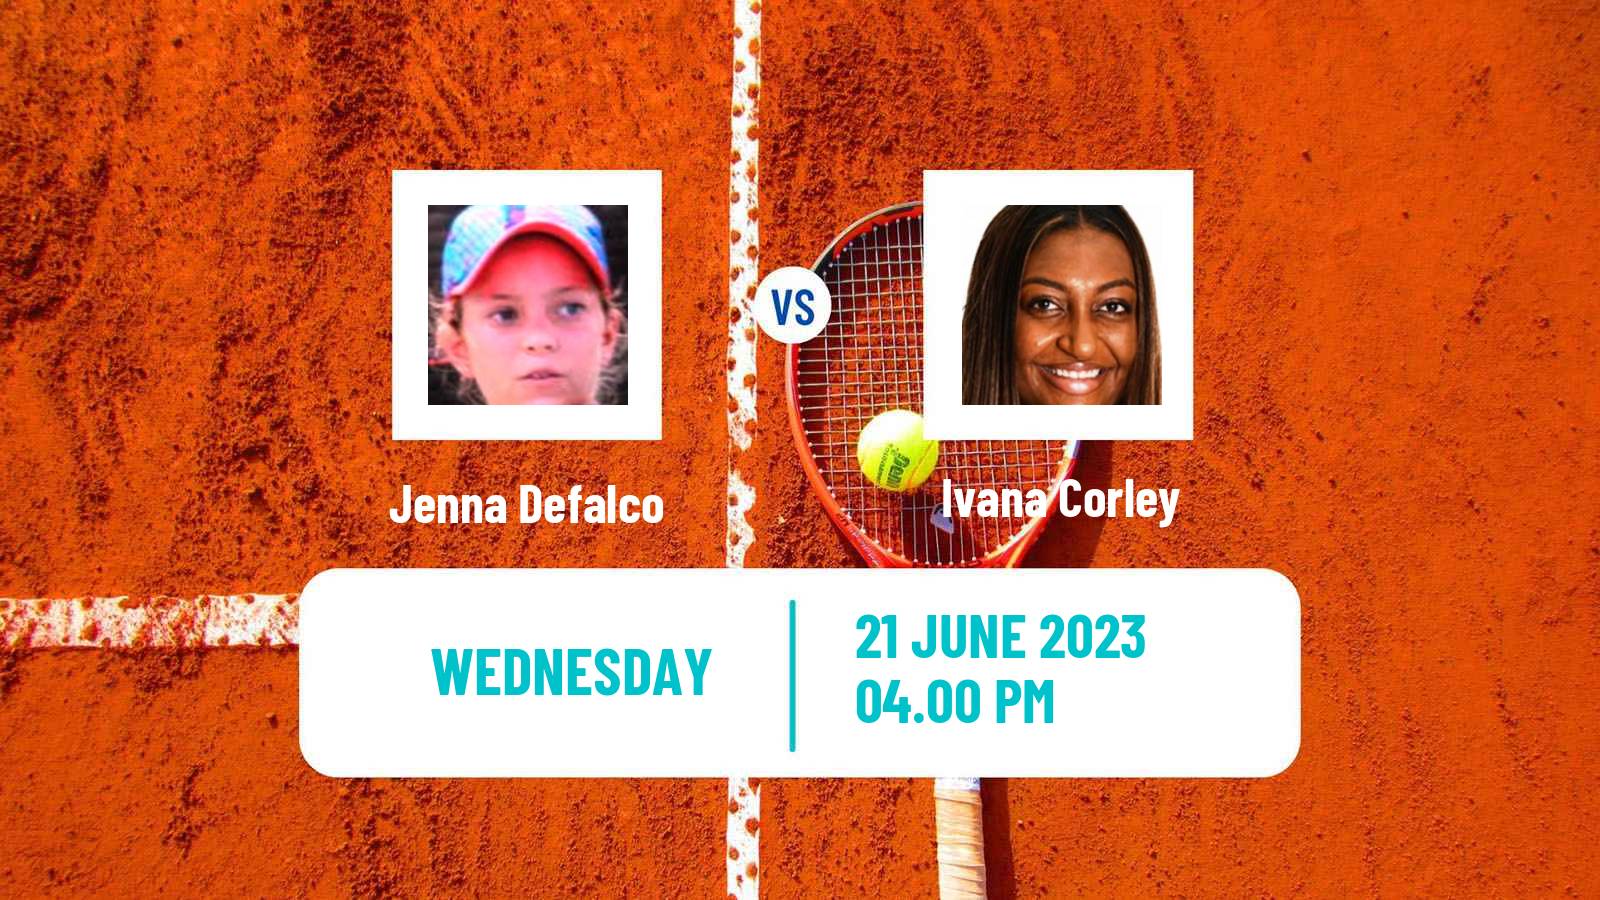 Tennis ITF W25 Wichita 2 Women Jenna Defalco - Ivana Corley